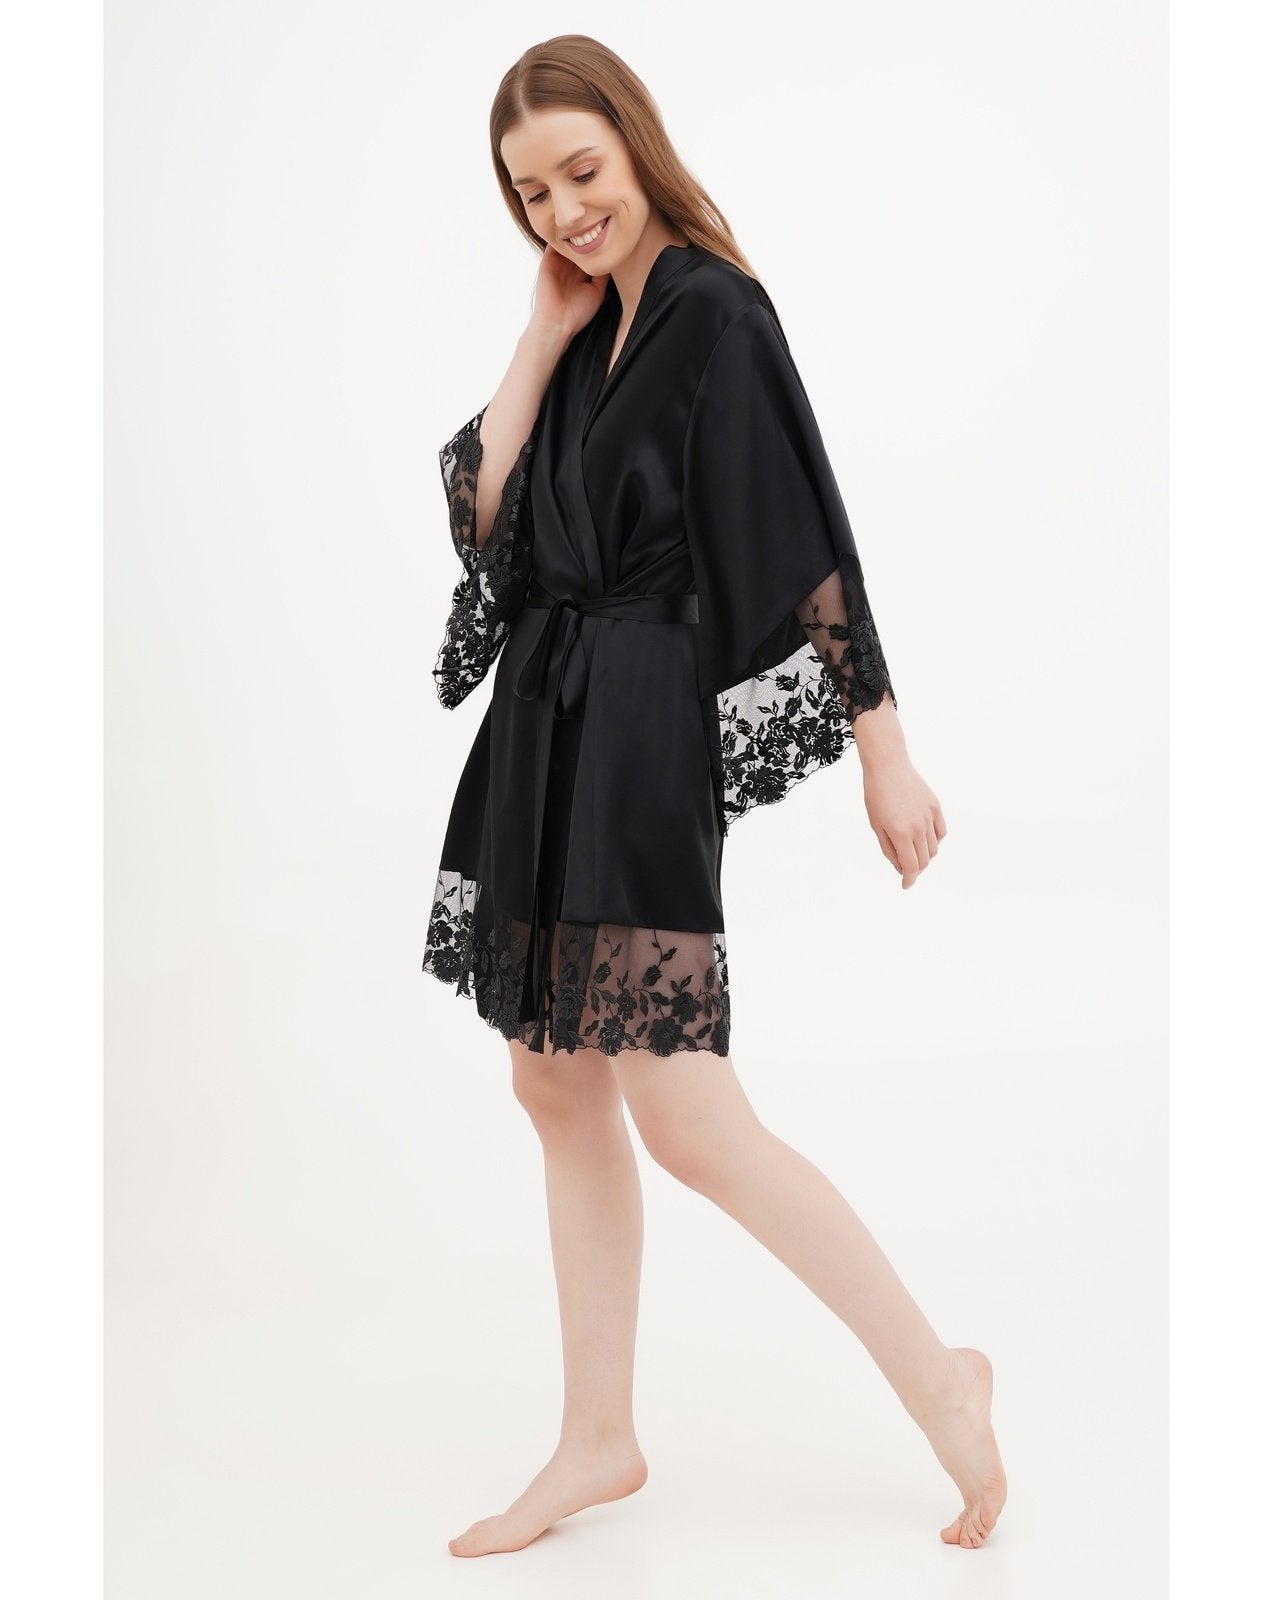 Silk Dressing Gown, Silk Robe, Black Robe, Long Robe, Maxi Dressing Gown  Kimono Robe Womens Satin Robe Bridesmaid Gown Nightwear Sleepwear - Etsy